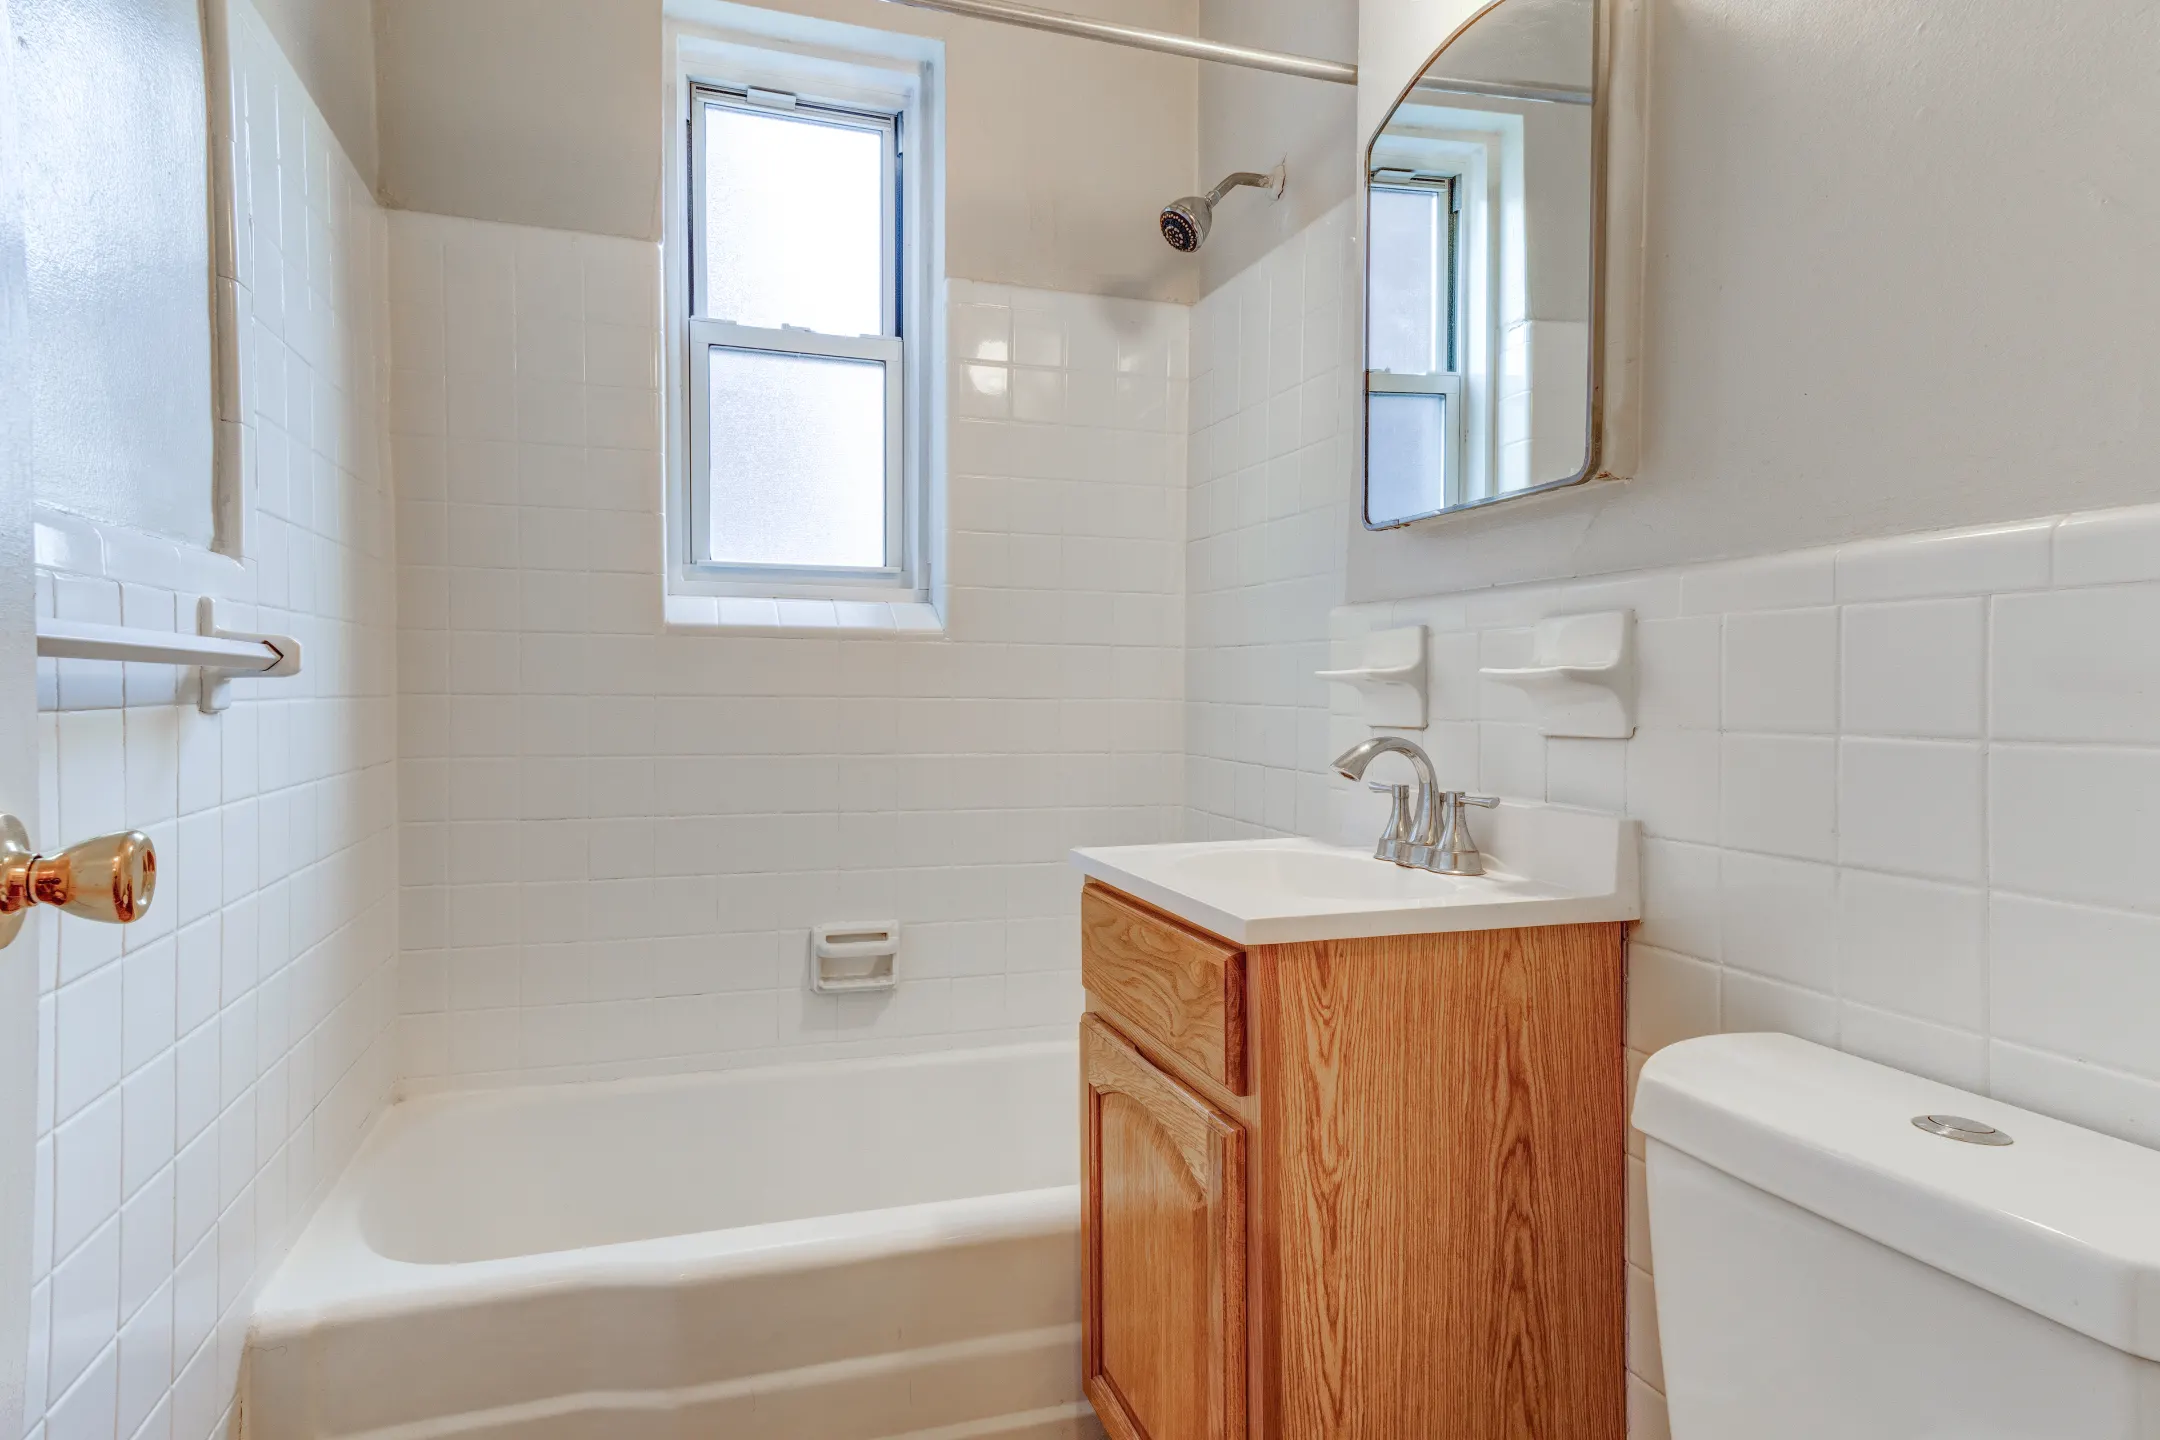 Bathroom - Harbor Terrace - Perth Amboy, NJ